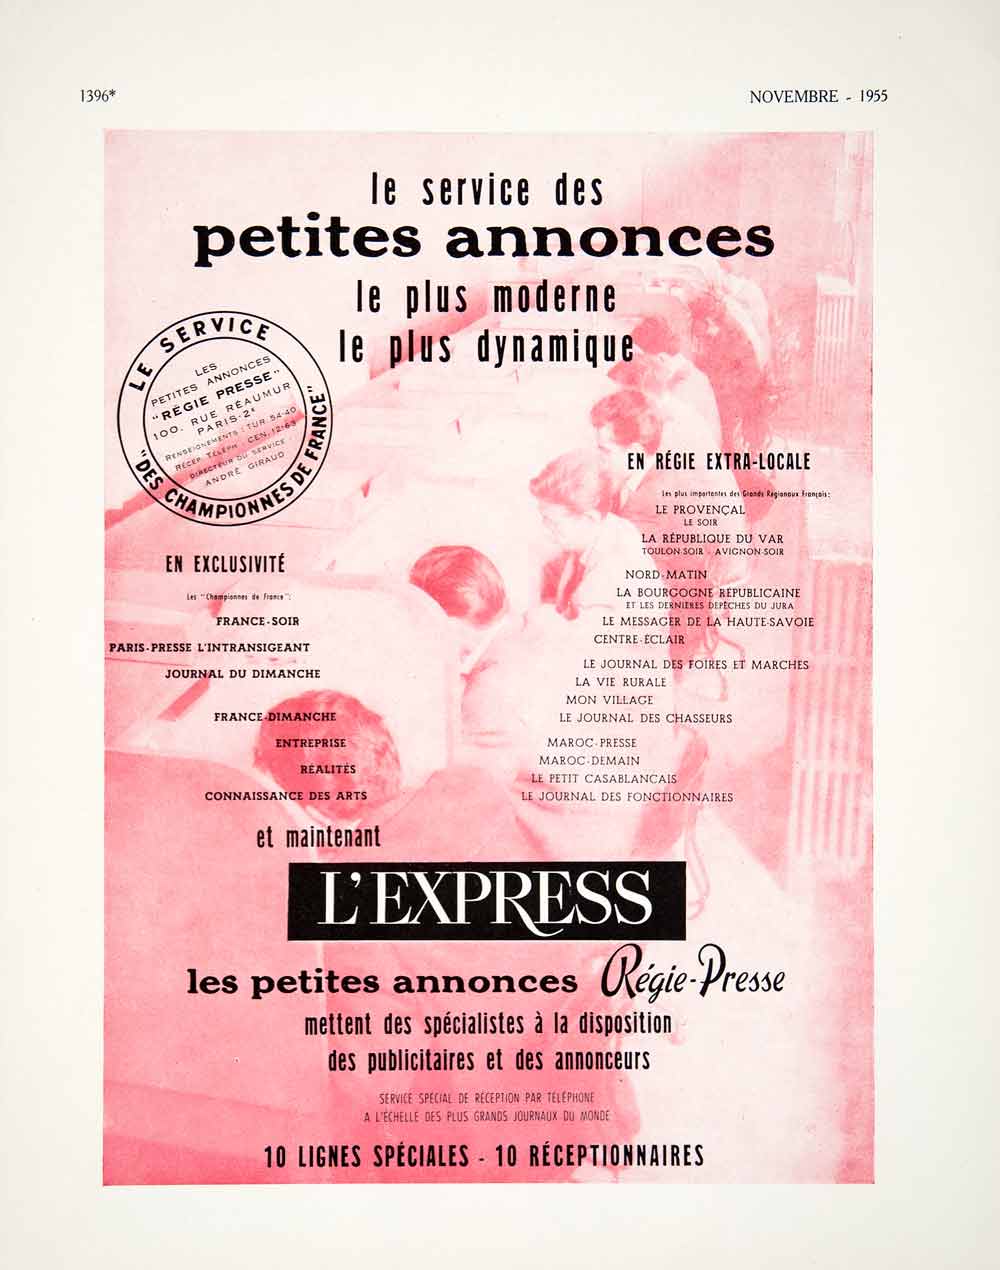 1955 Ad French Advertisement L'Express Regie-Presse Rue Reaumur Paris VEN2